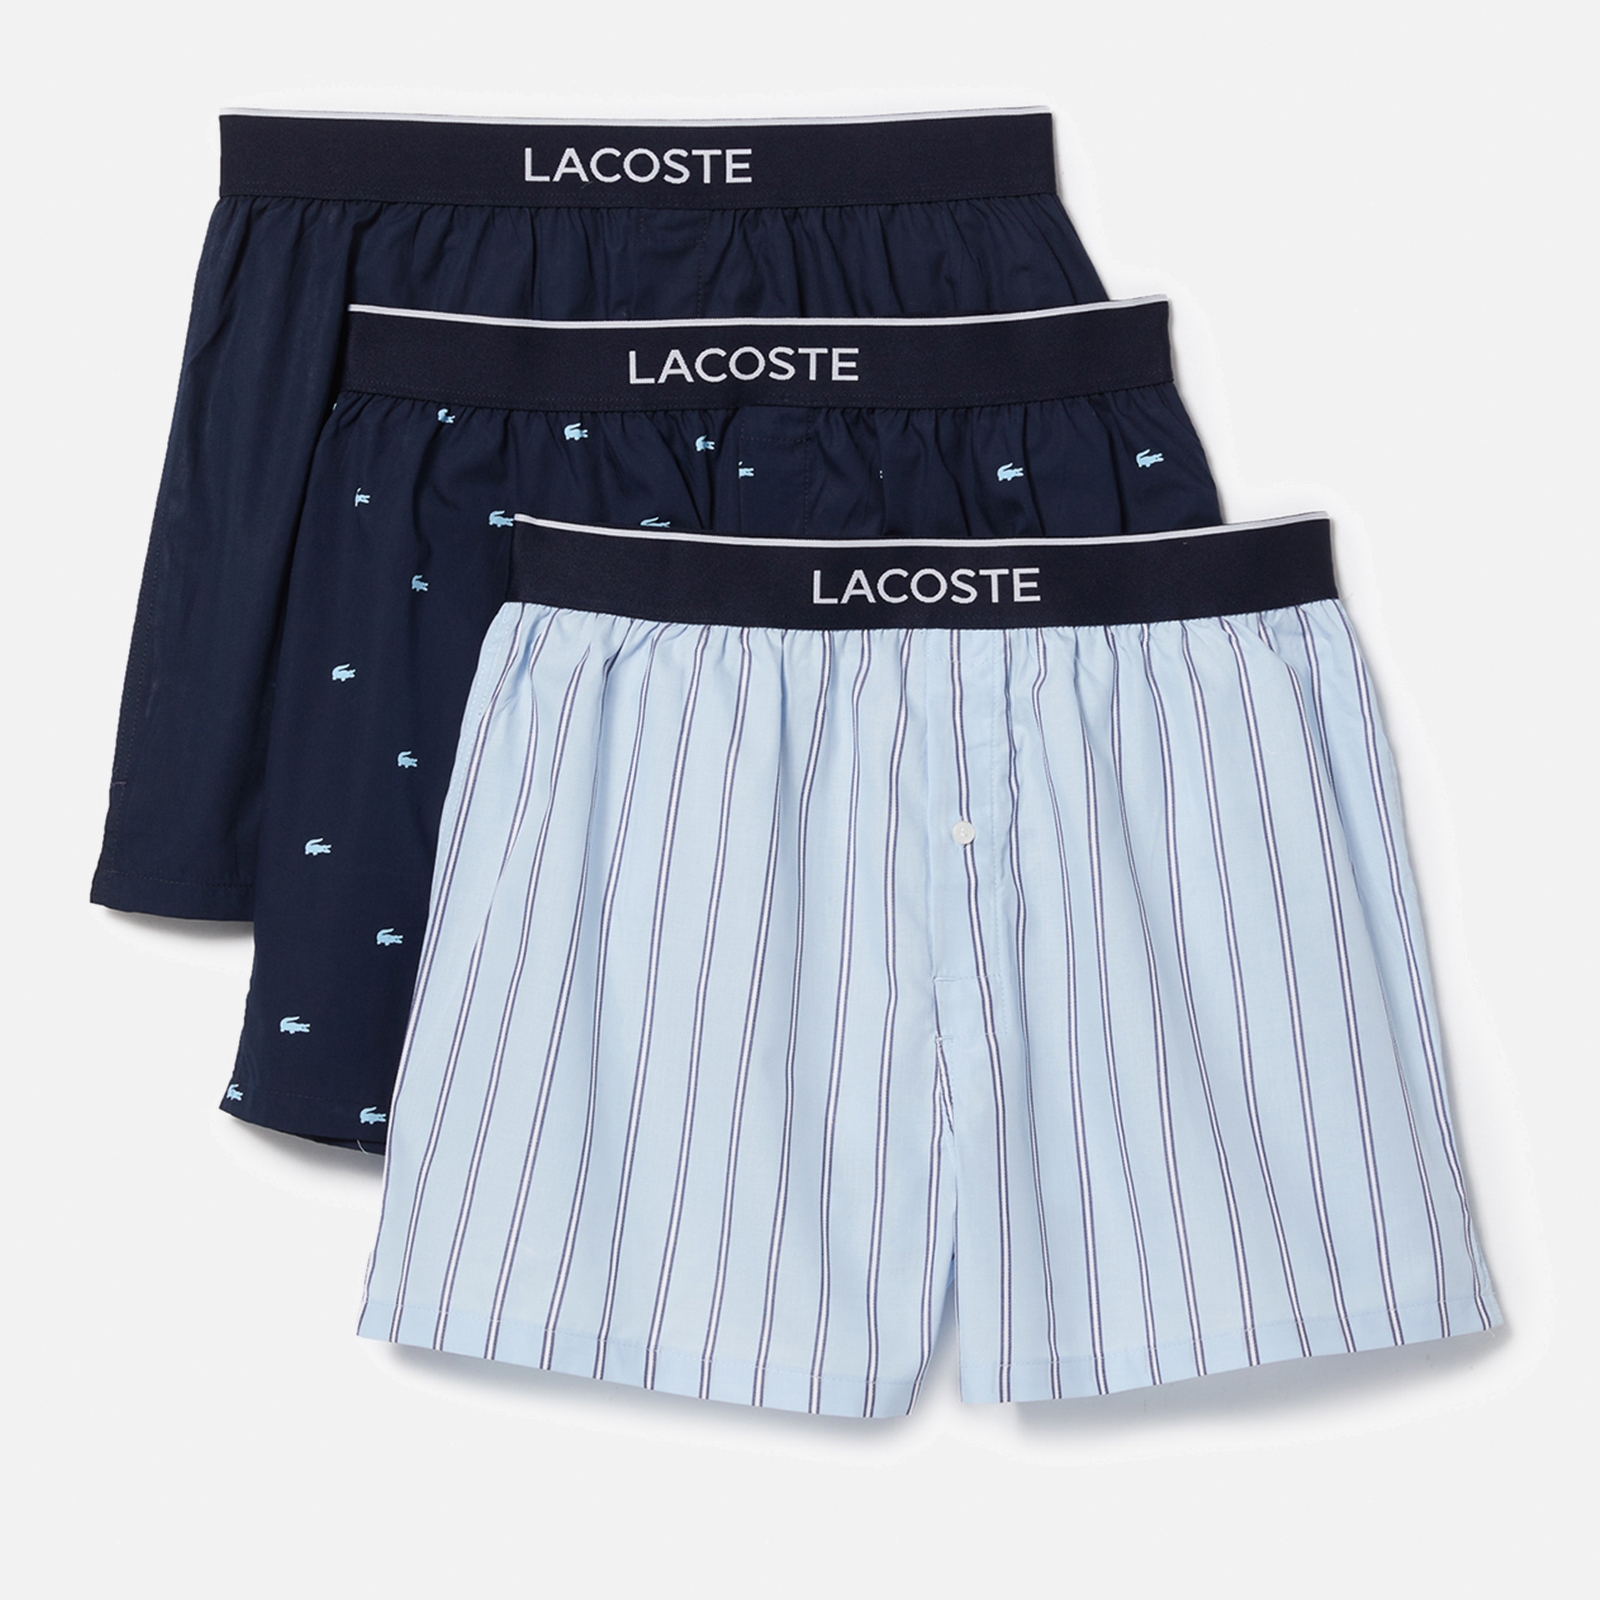 Lacoste 3 Pack Woven Cotton Boxer Shorts